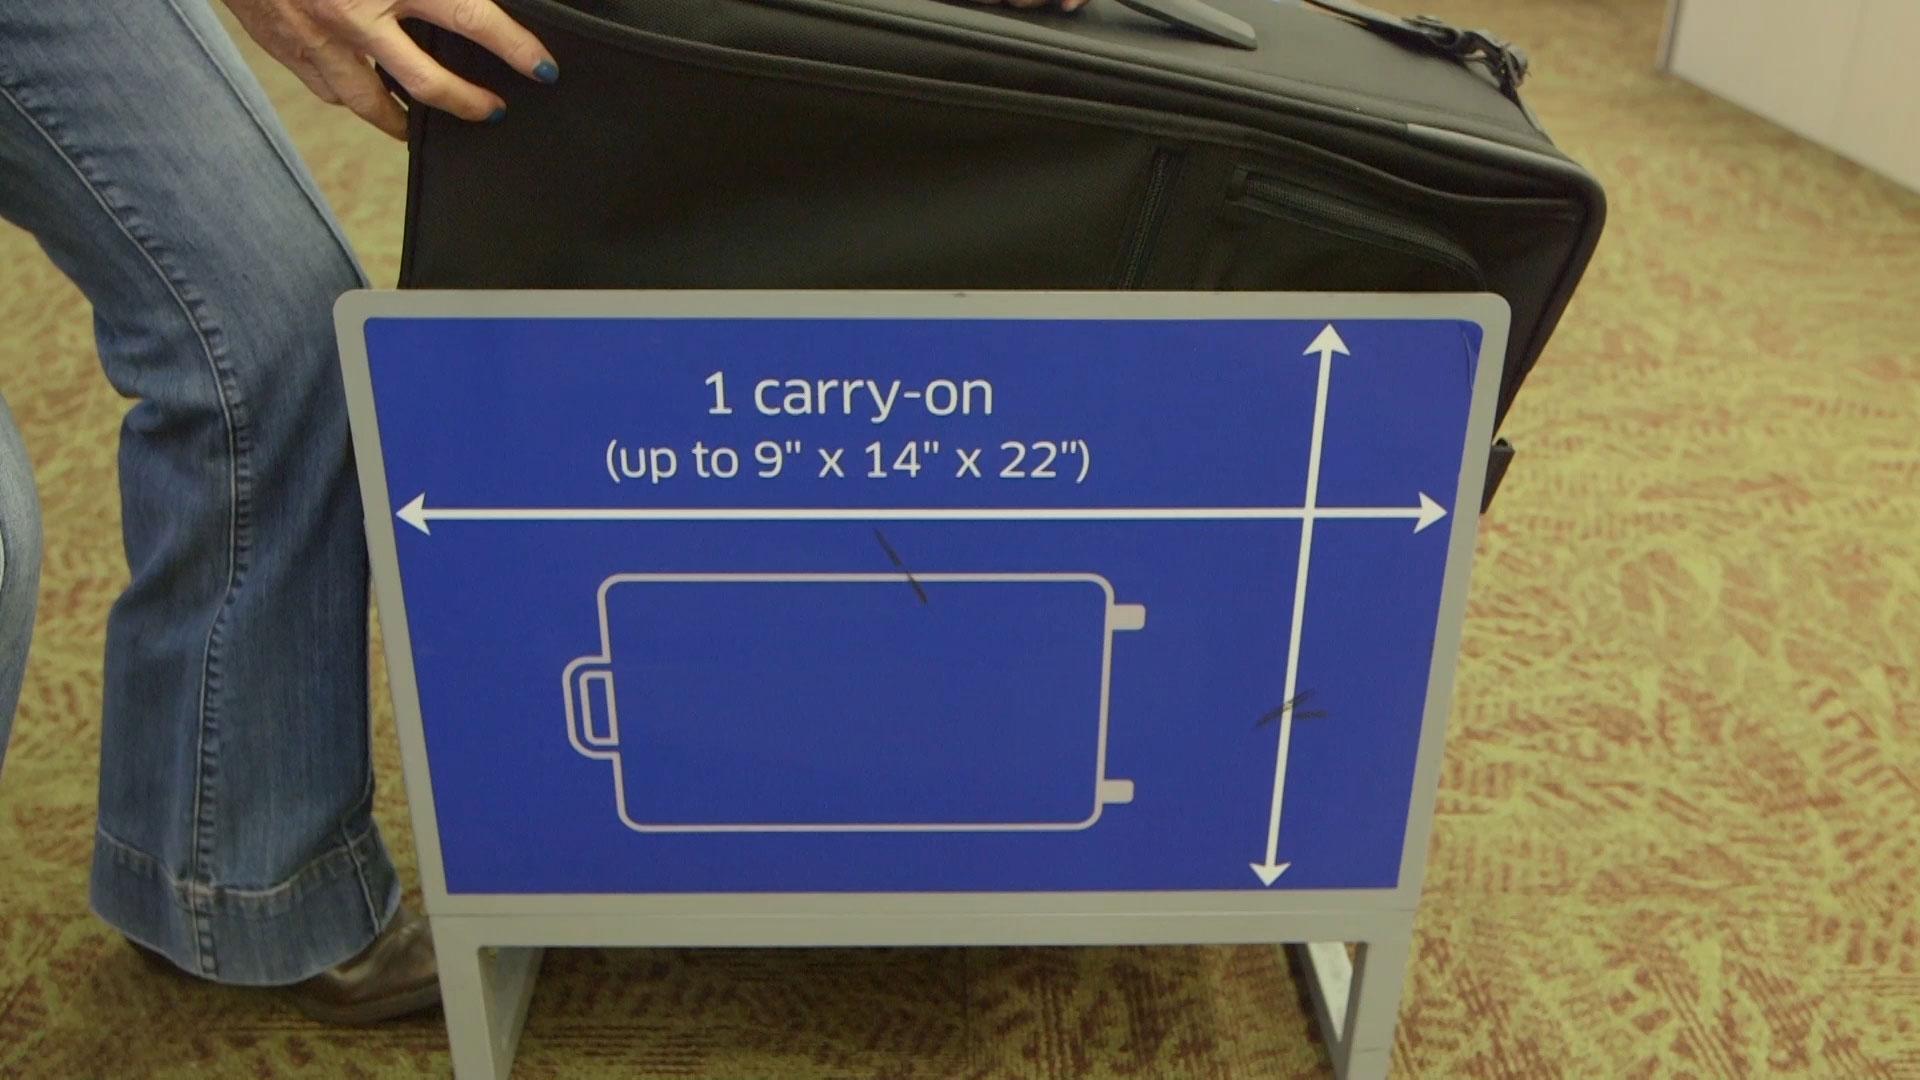 Luggage Types 101 - Luggage Buying Guide